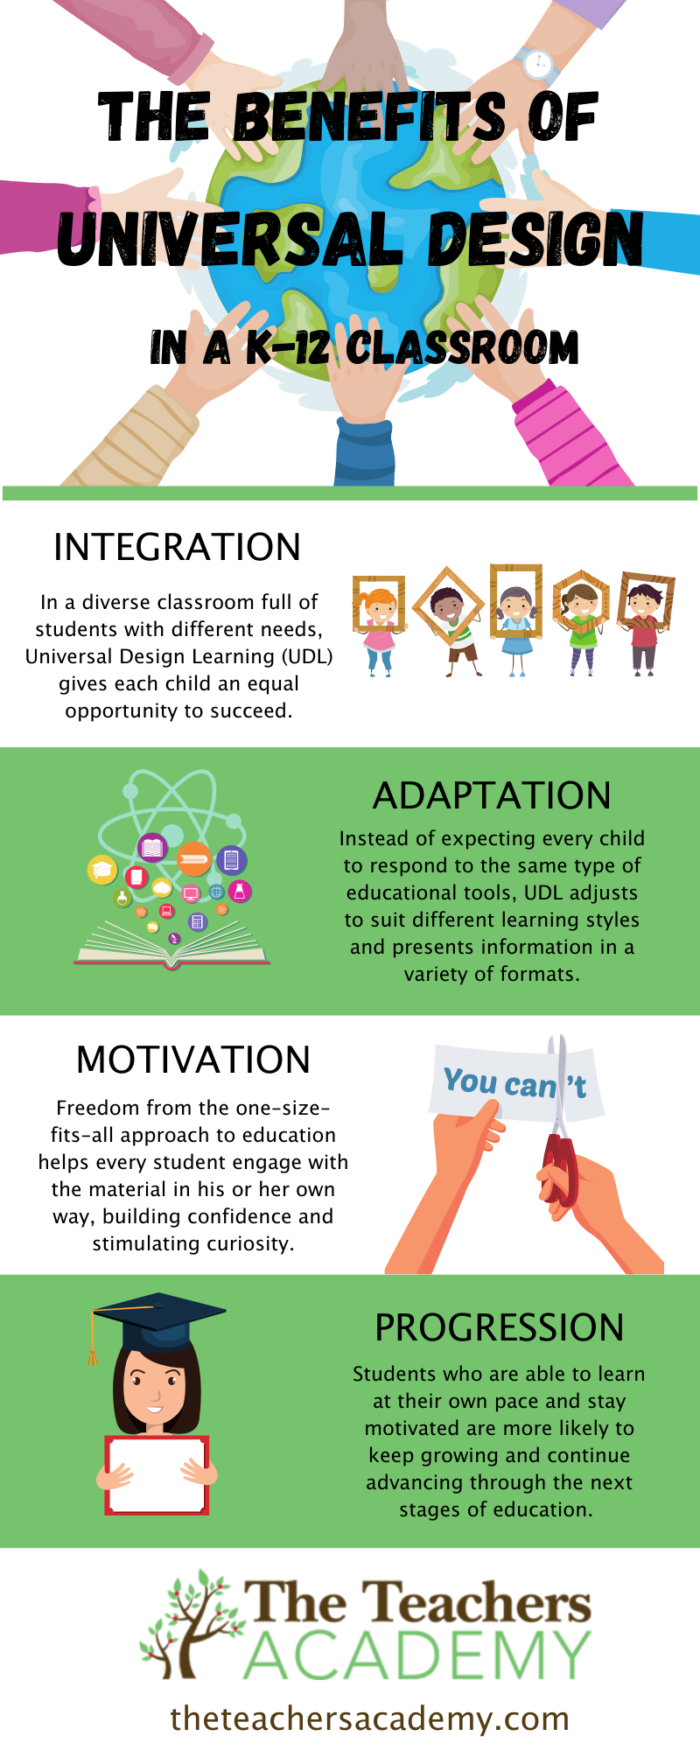 Teachers Academy 2020 Infographic 700x1750 